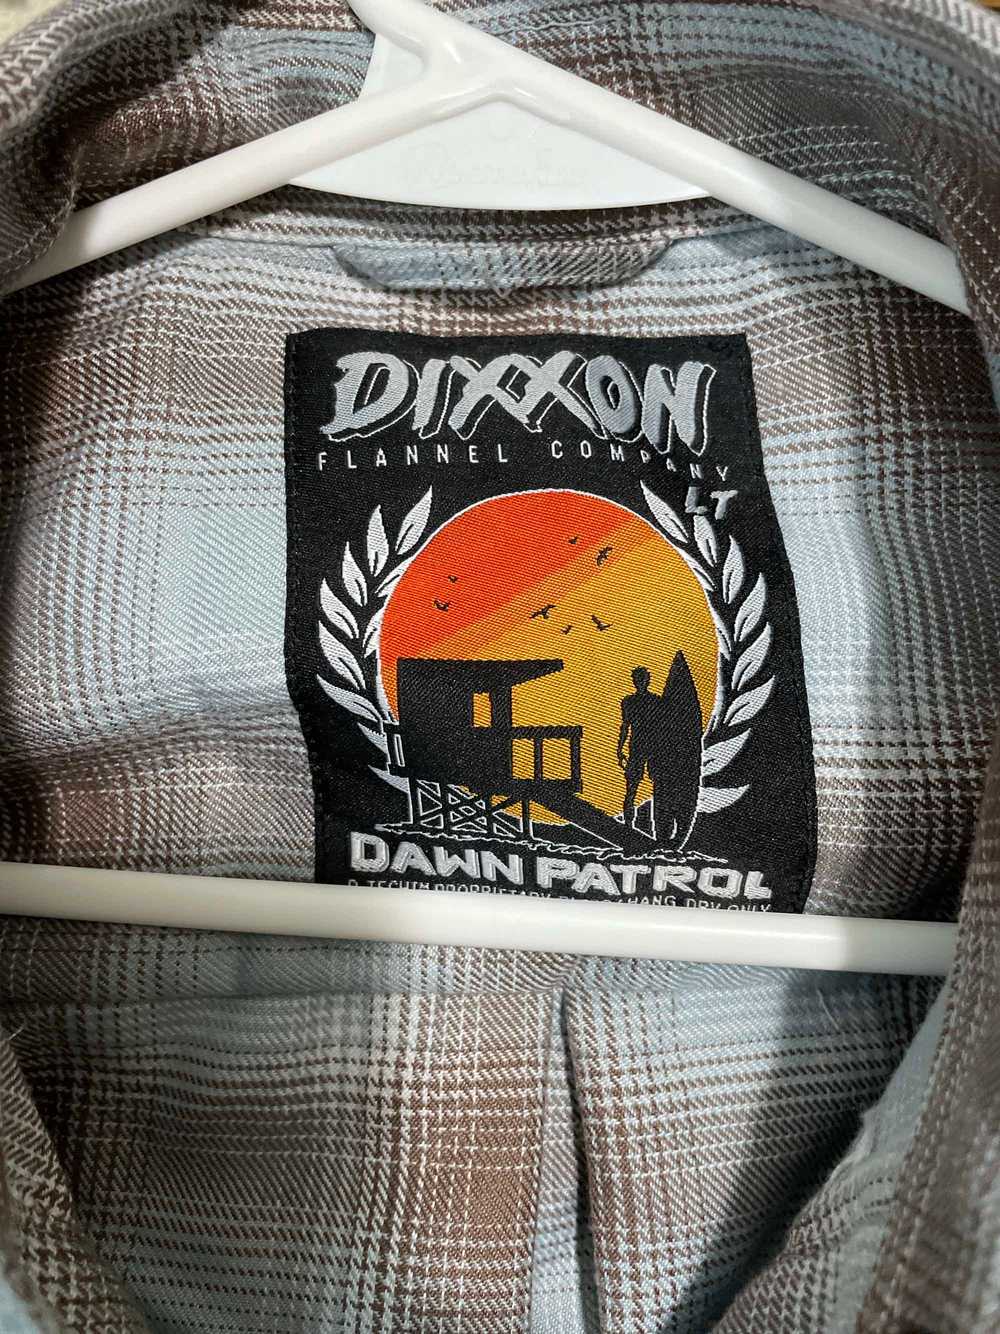 dixxon Dawn Patrol Flannel - image 3